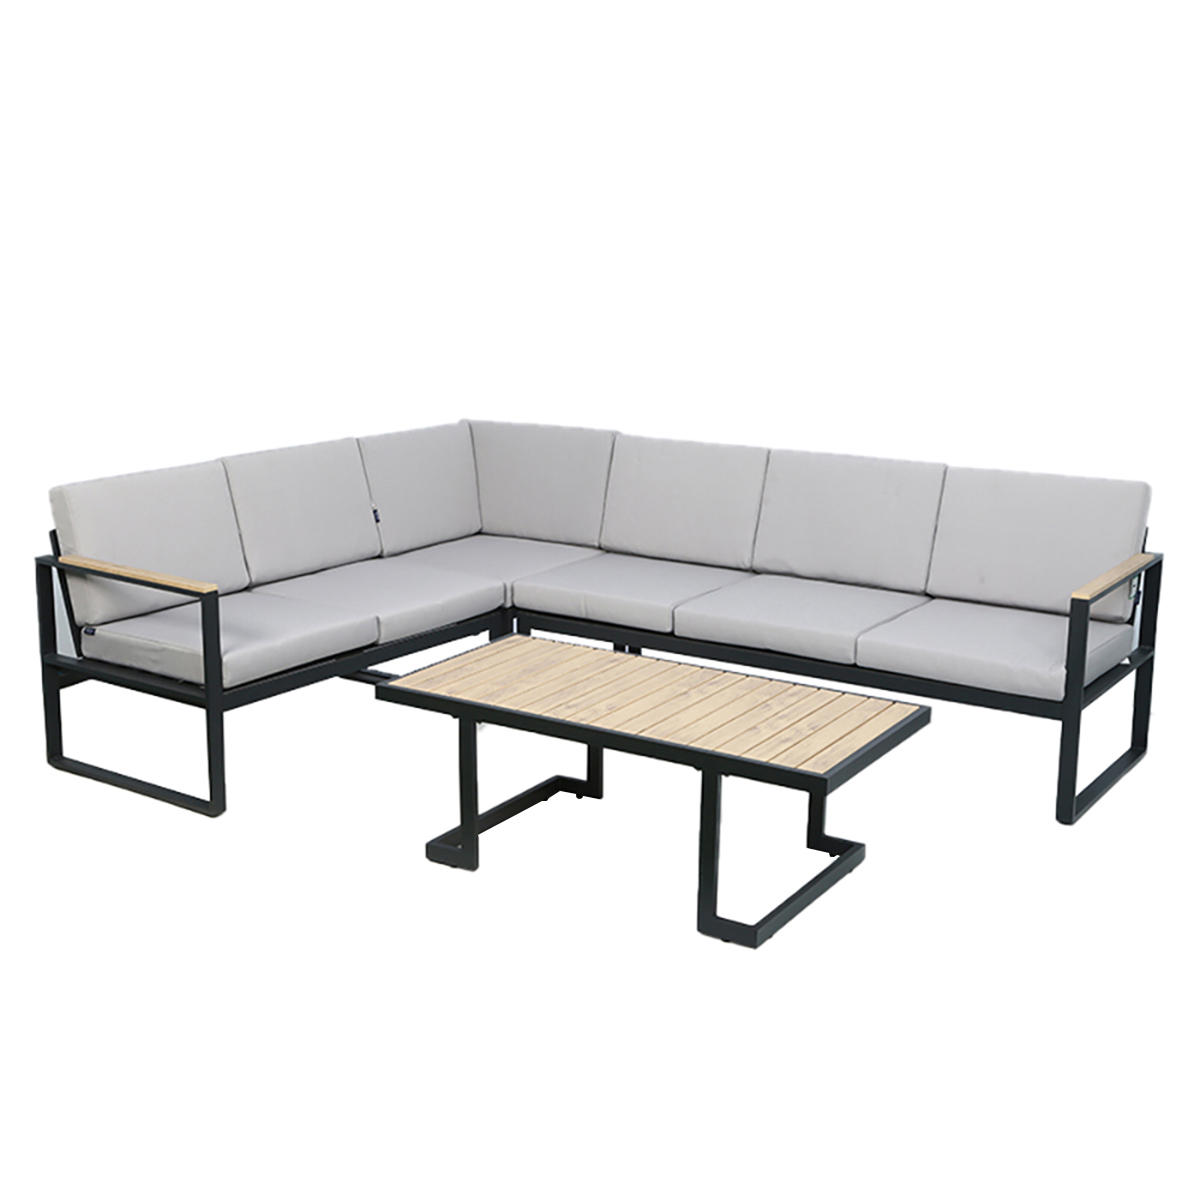 Charles Bentley Polywood And Extrusion Aluminium Corner Sofa And Coffee Table Set